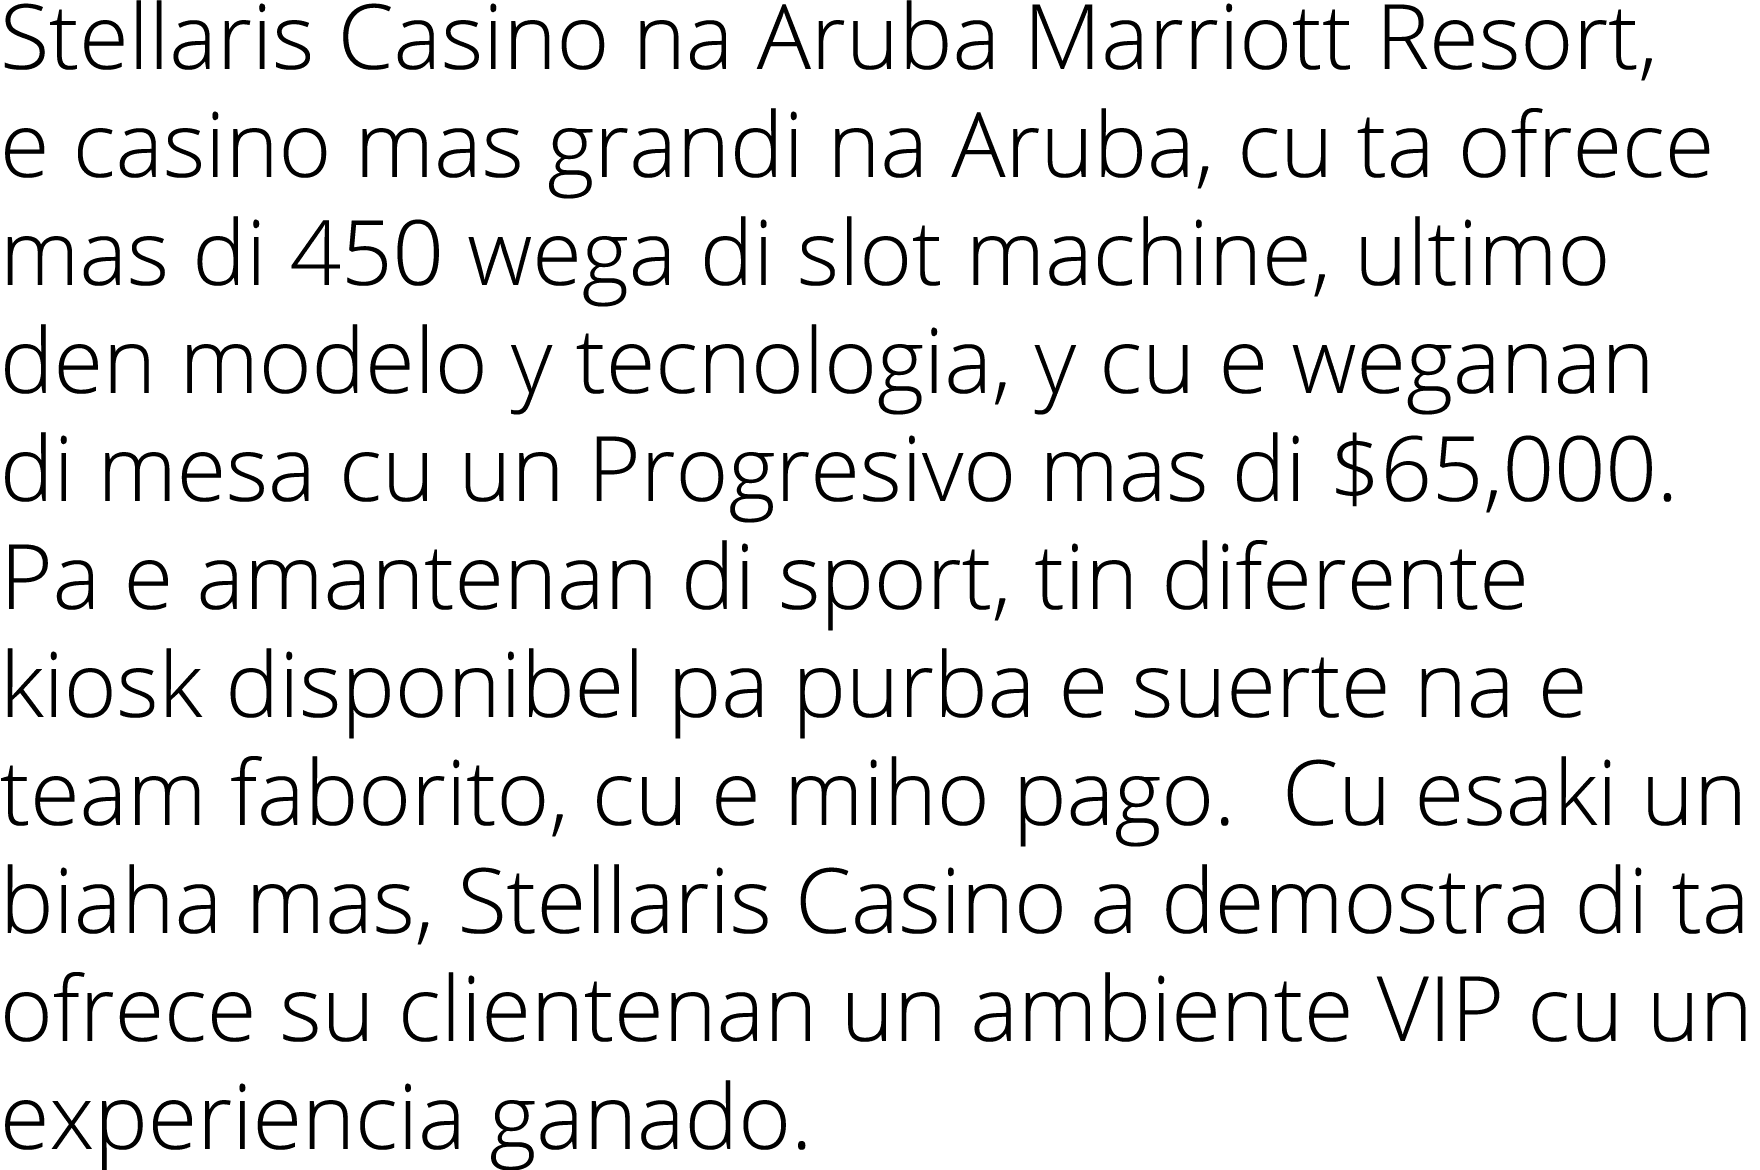 Stellaris Casino na Aruba Marriott Resort, e casino mas grandi na Aruba, cu ta ofrece mas di 450 wega di slot machine   